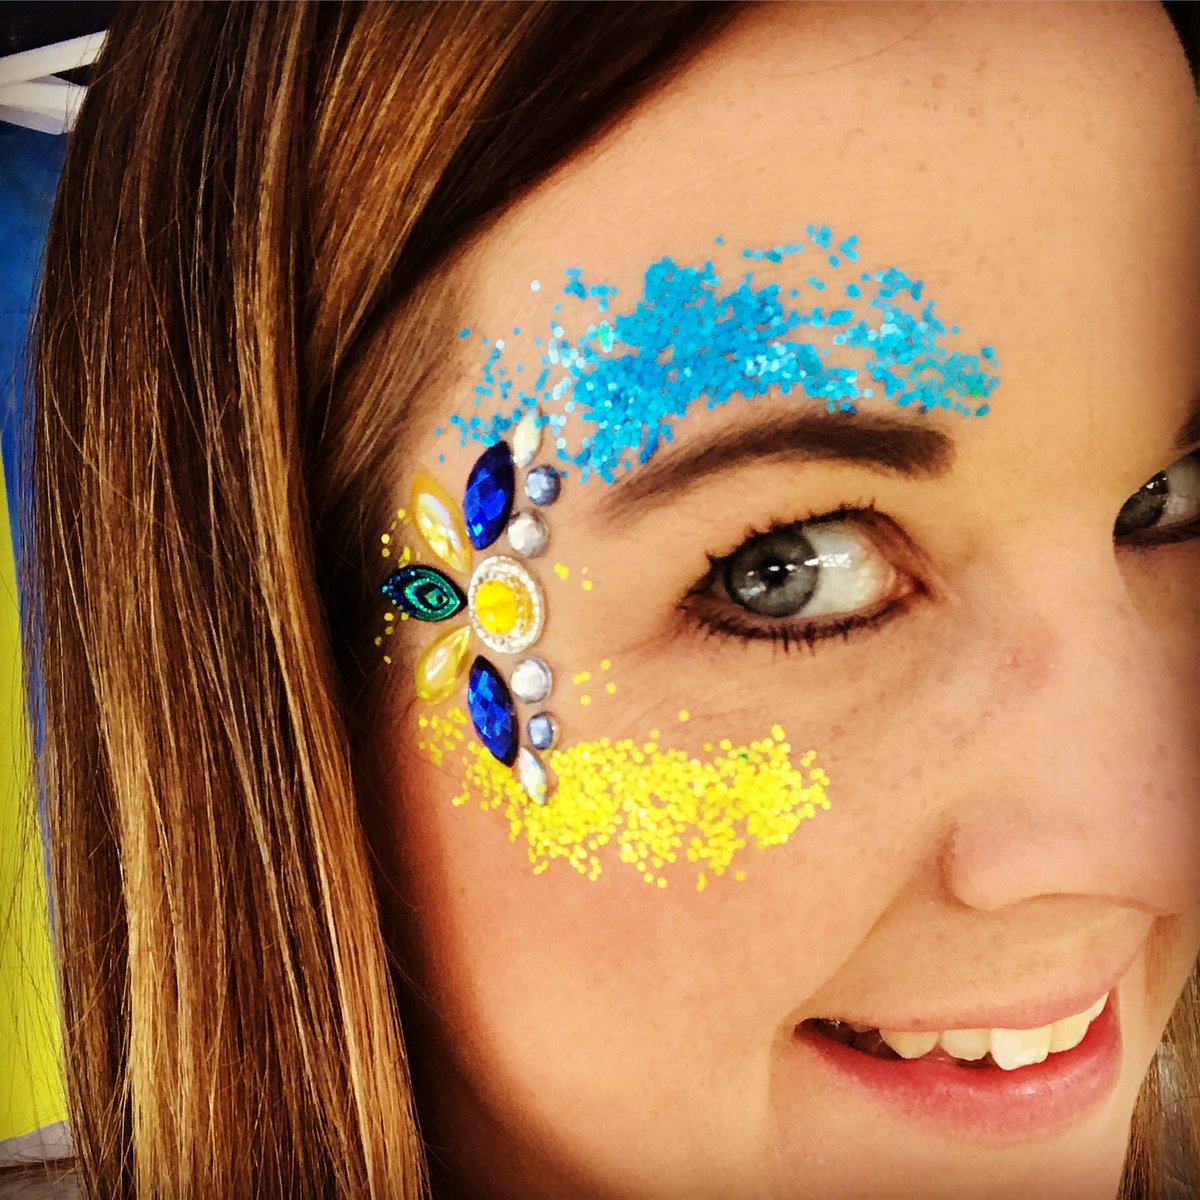 All ready in my blue and yellow for the #spiritofukraine 2018! @FortyHallPark #spiritofukrainefestival #spiritofukraine2018 #ukraine Such a lovely event #facepaint #facepainter #facepainting #facejewels #facegems #festivalglitter #festivaleyes #festivalmakeup #glittereyes